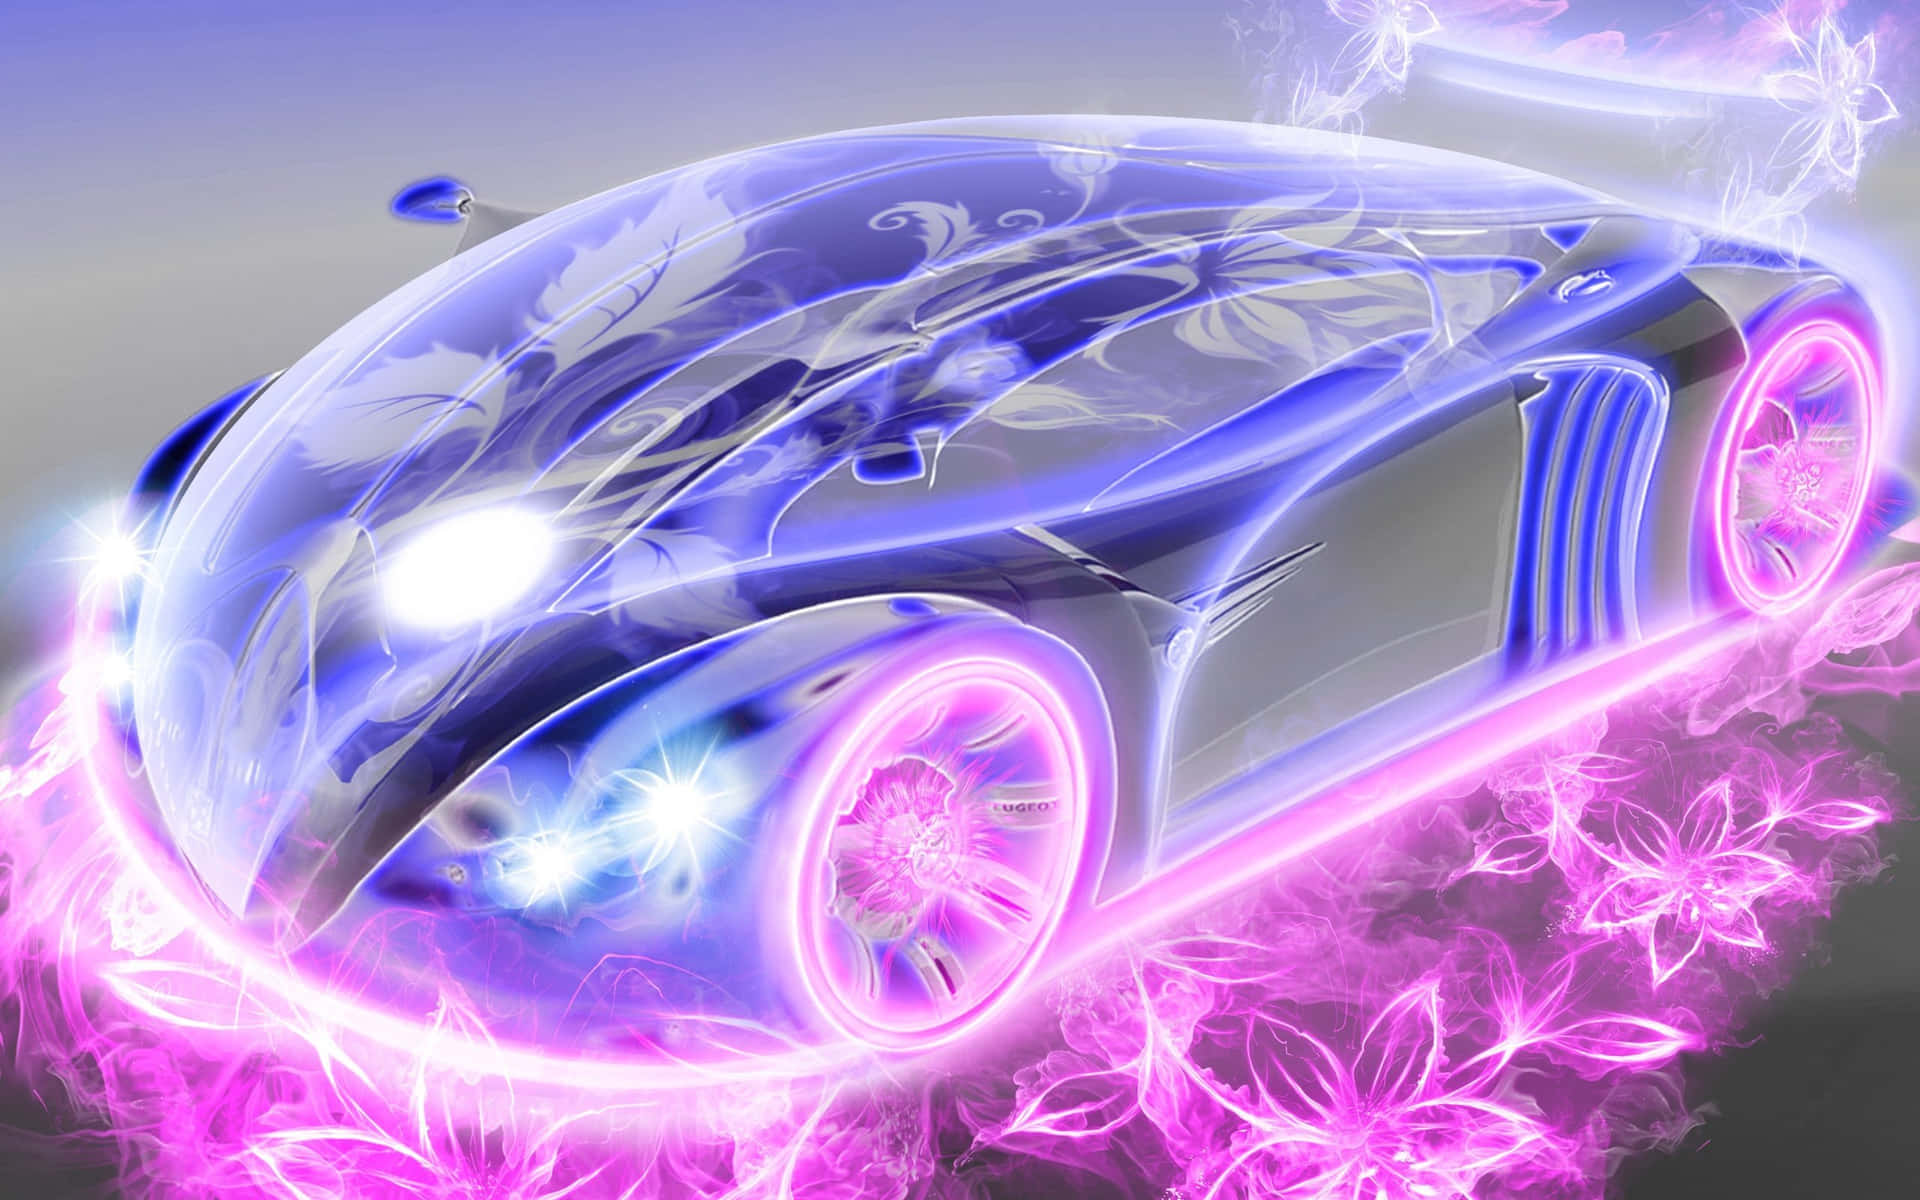 Download Cool Neon Cars Wallpaper